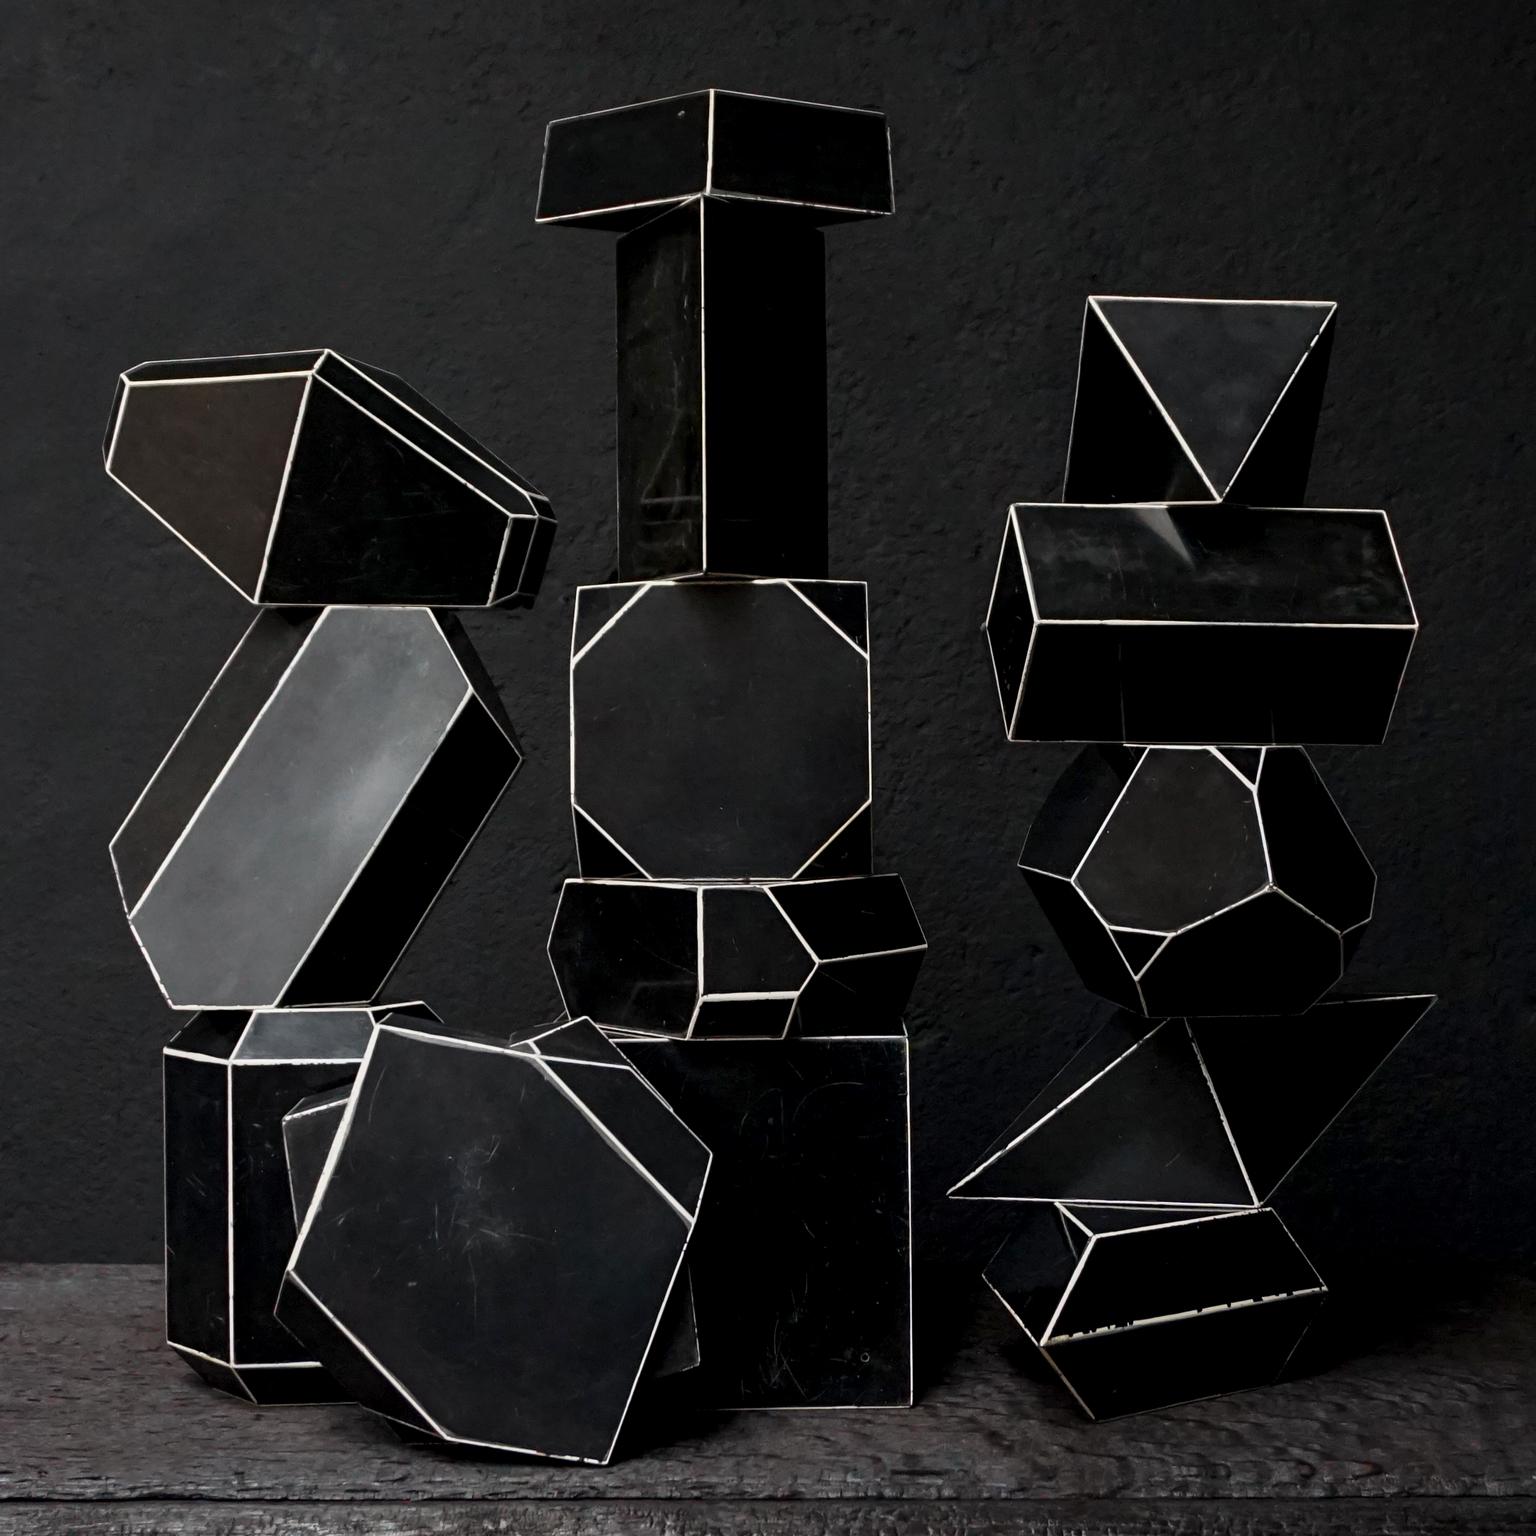 Fourteen French Geometric Bakelite Art Deco Science Classroom Crystal Models 1